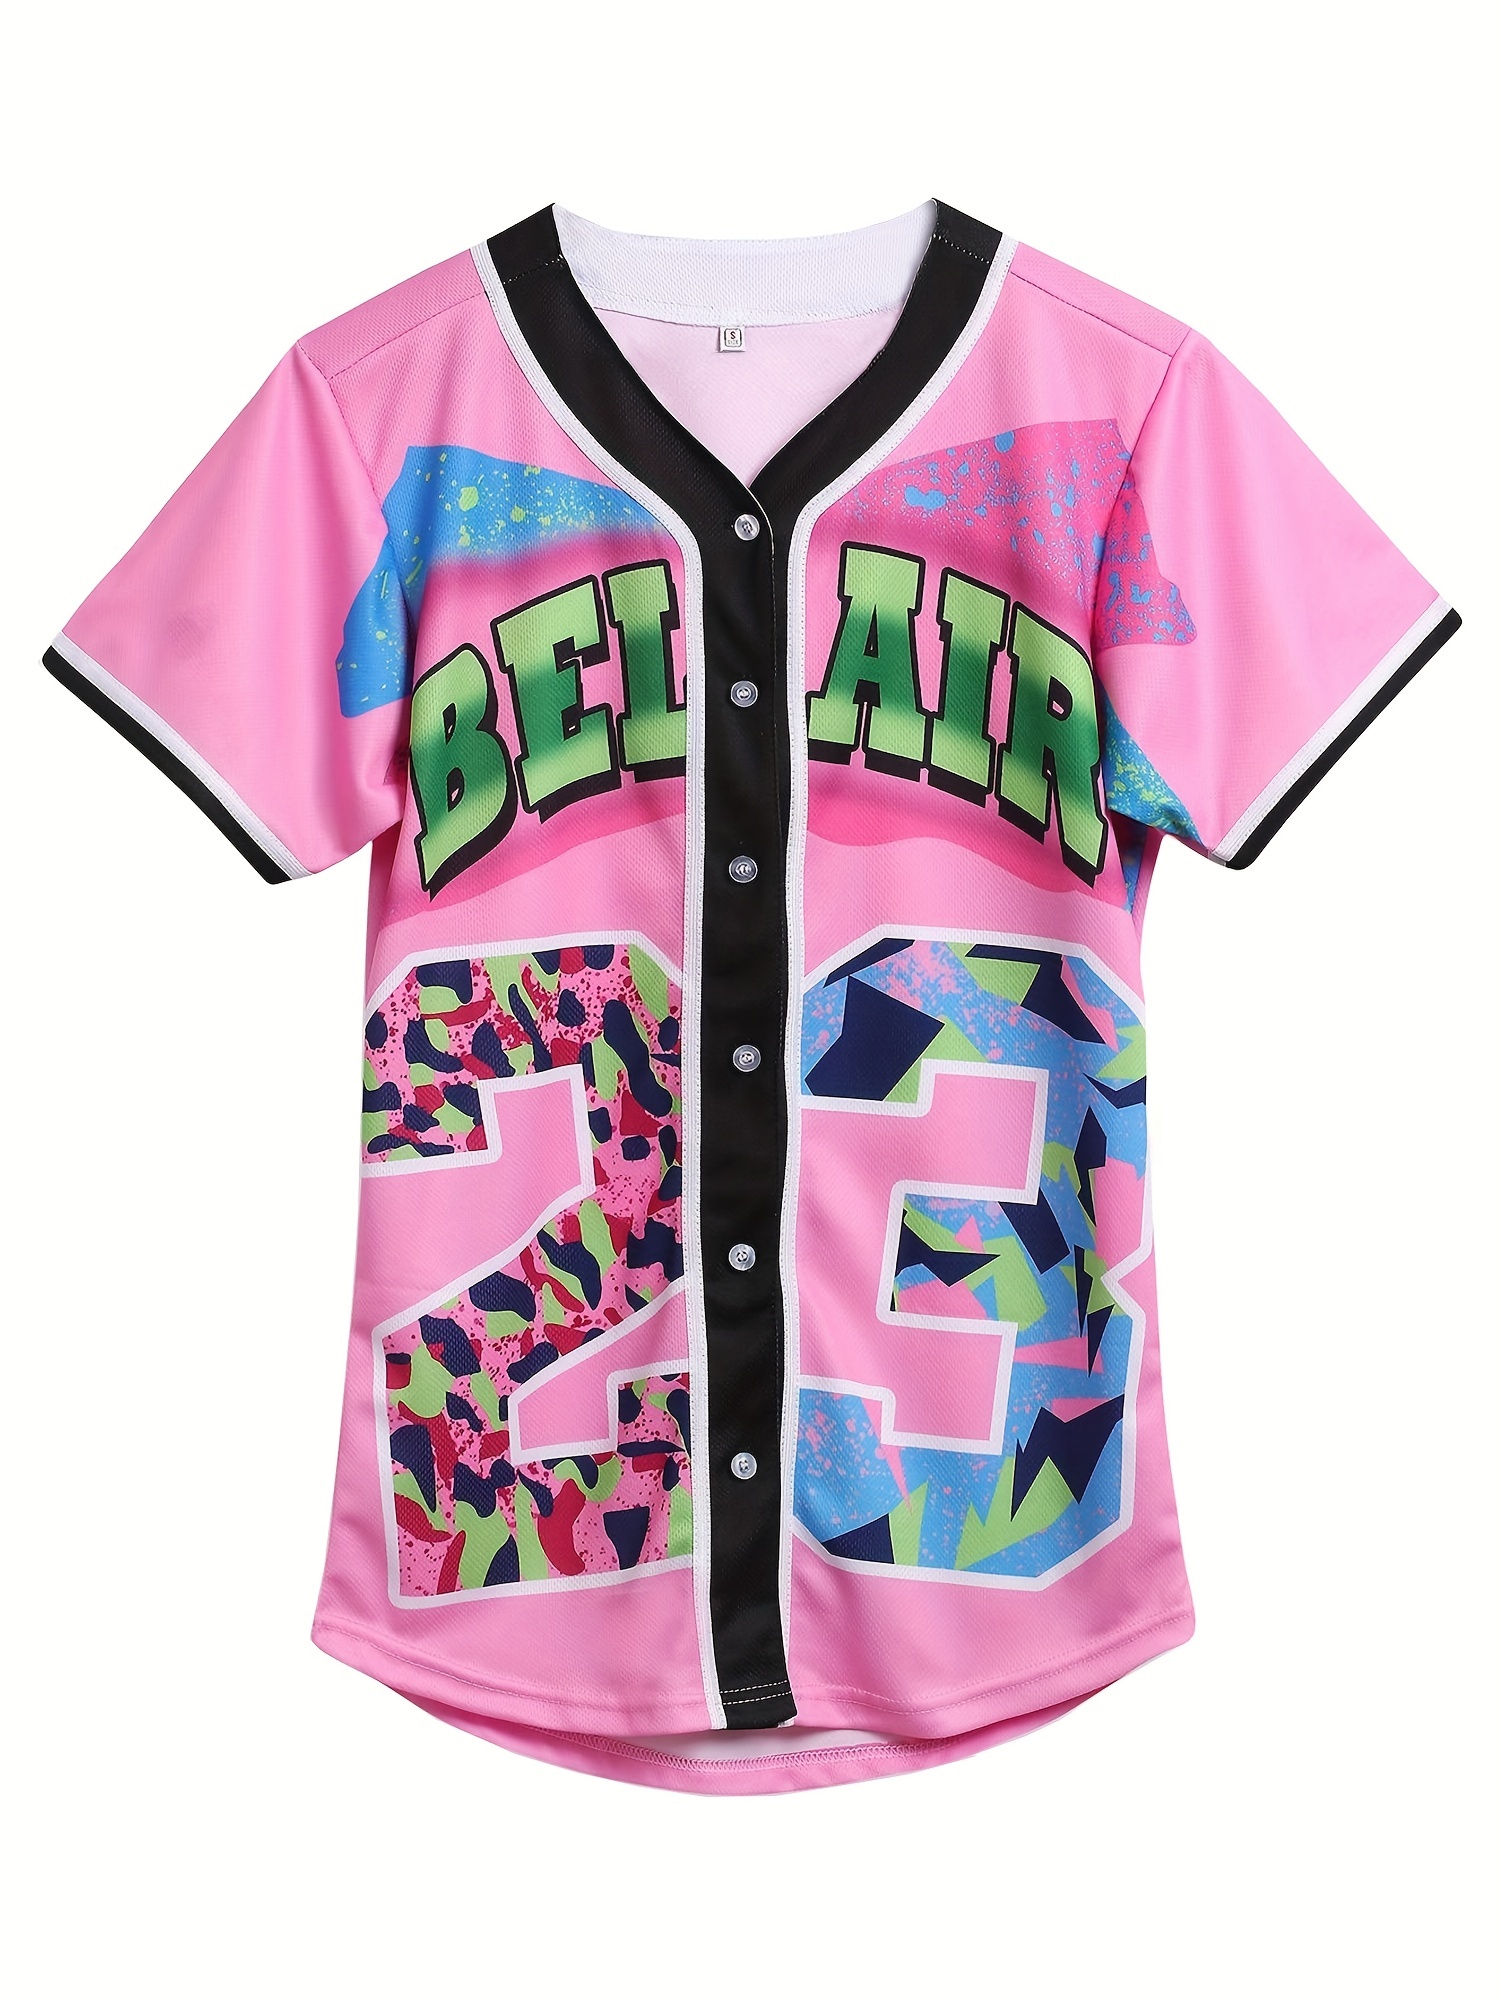 Baseball jersey outfit, Baseball jersey outfit women, Baseball shirt outfit